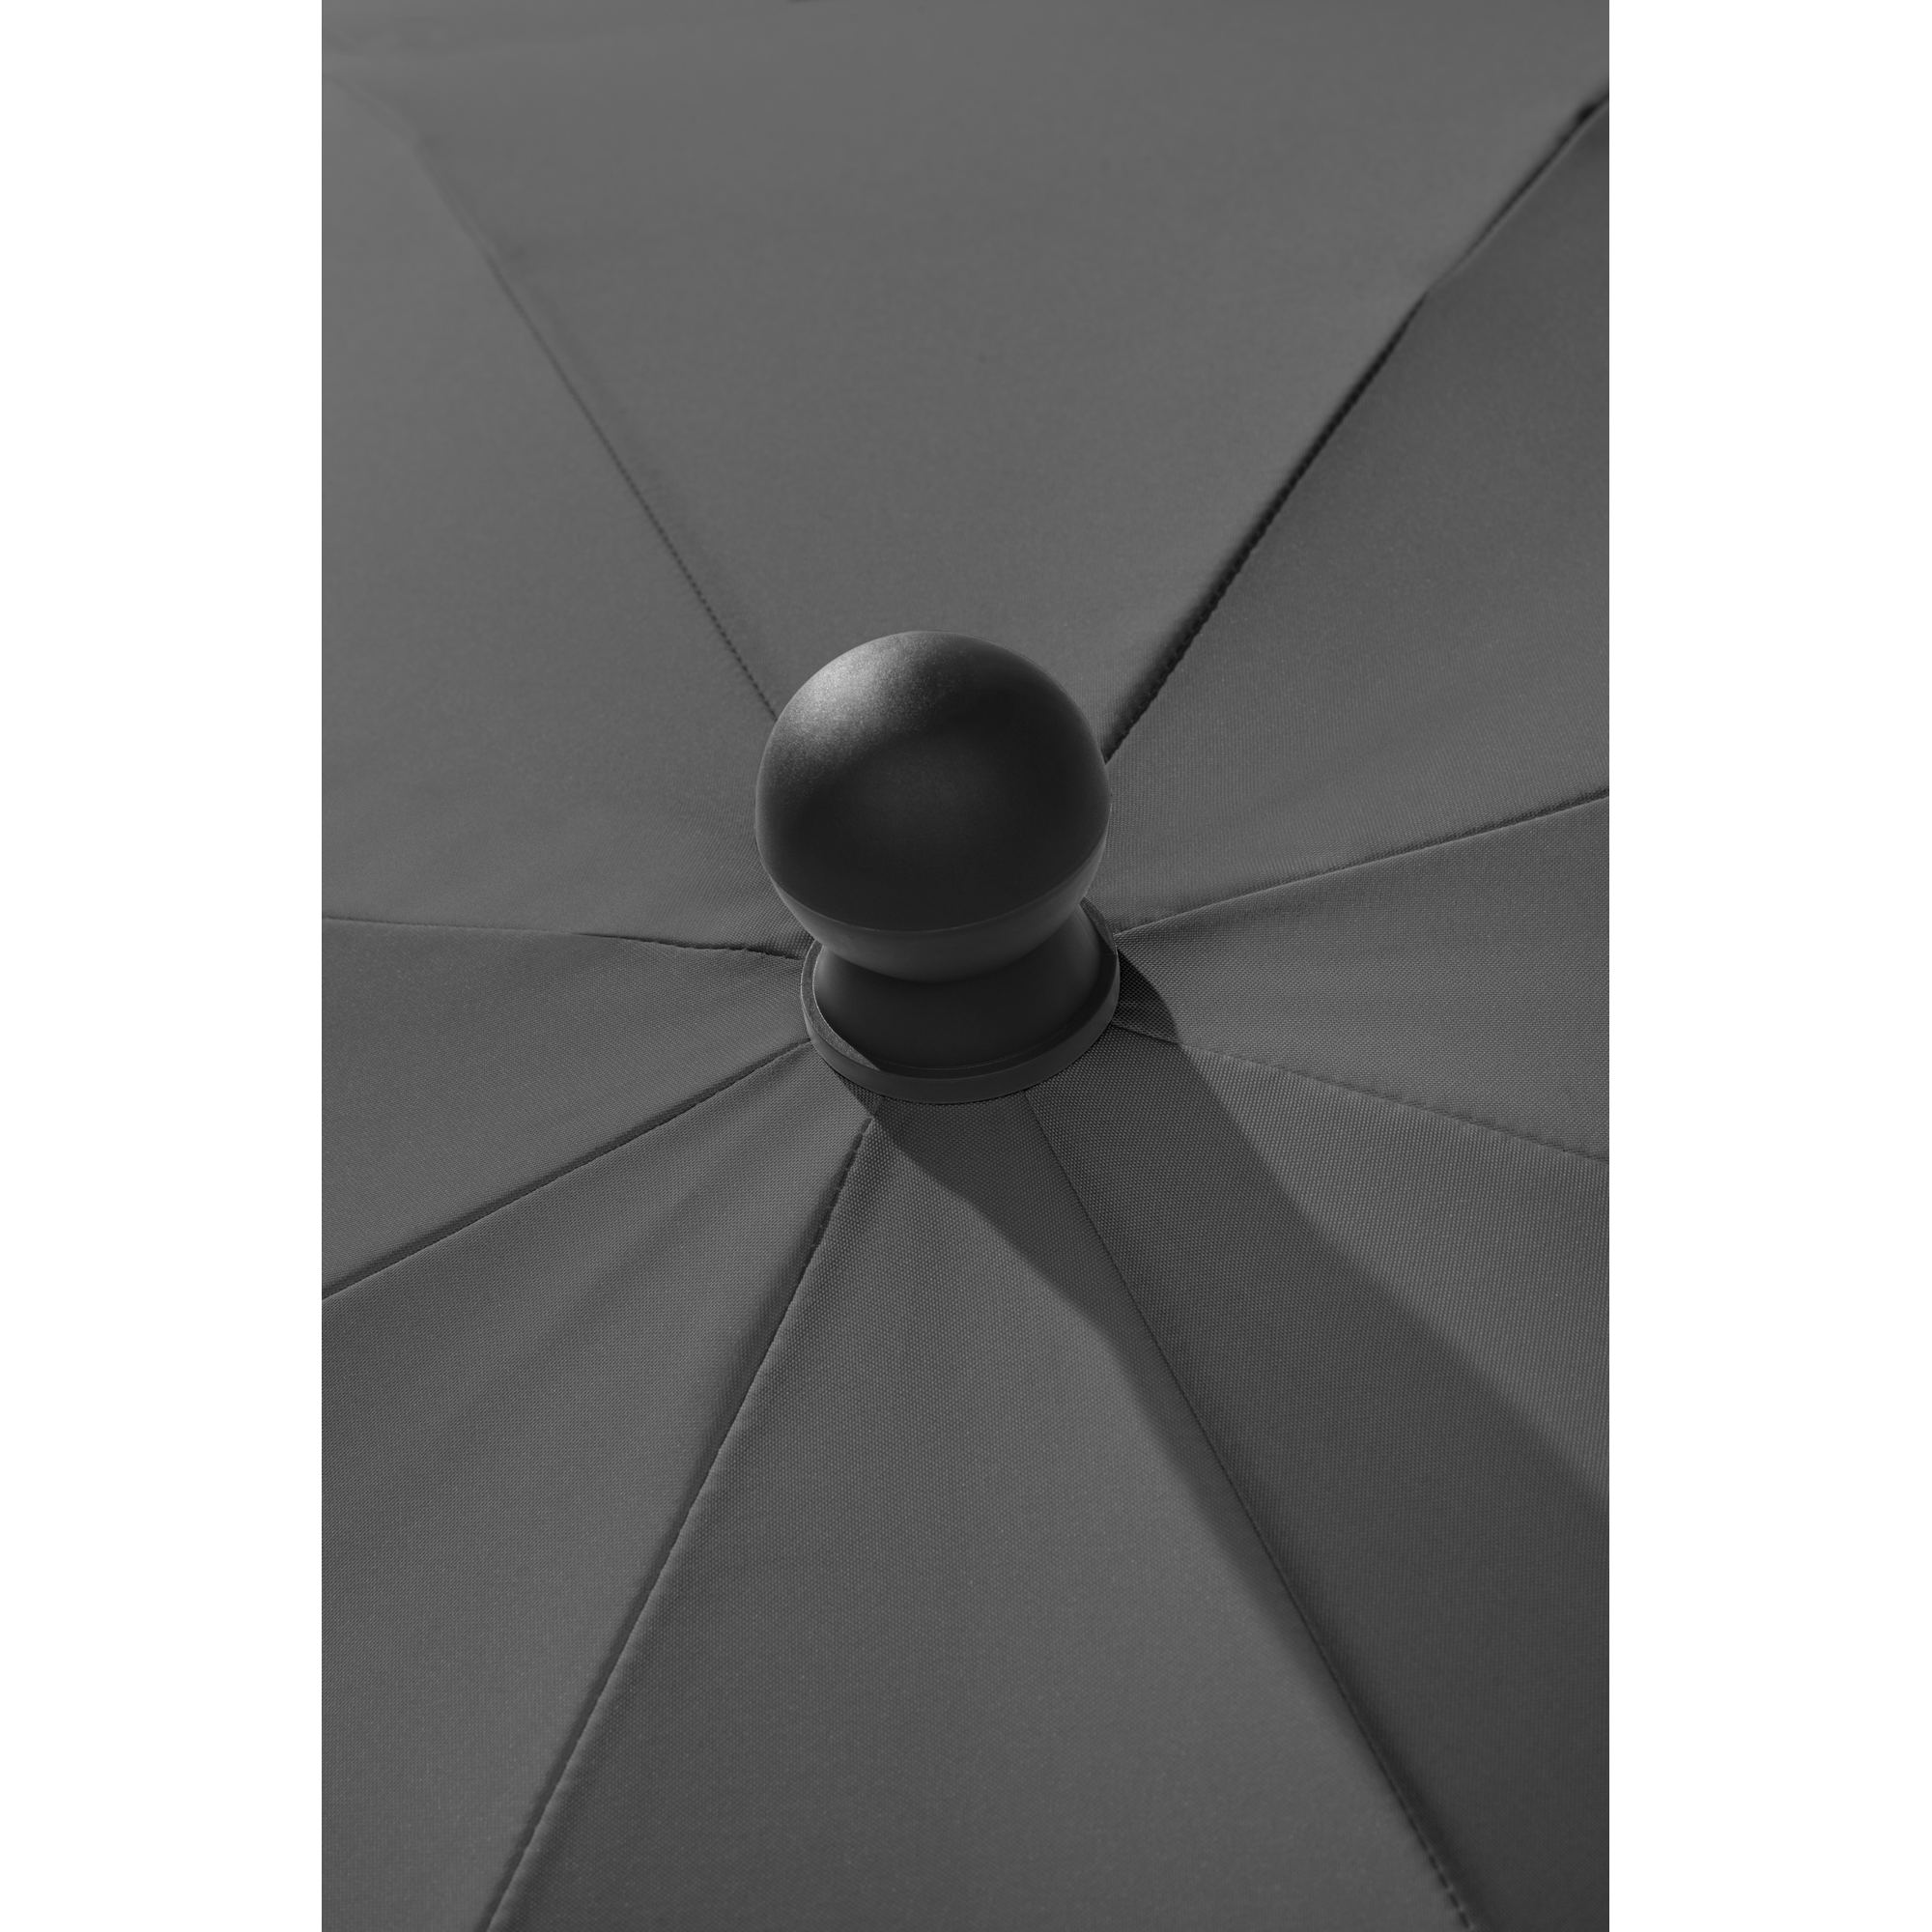 Sonnenschirm 'Locarno' anthrazit Ø 150 cm + product picture